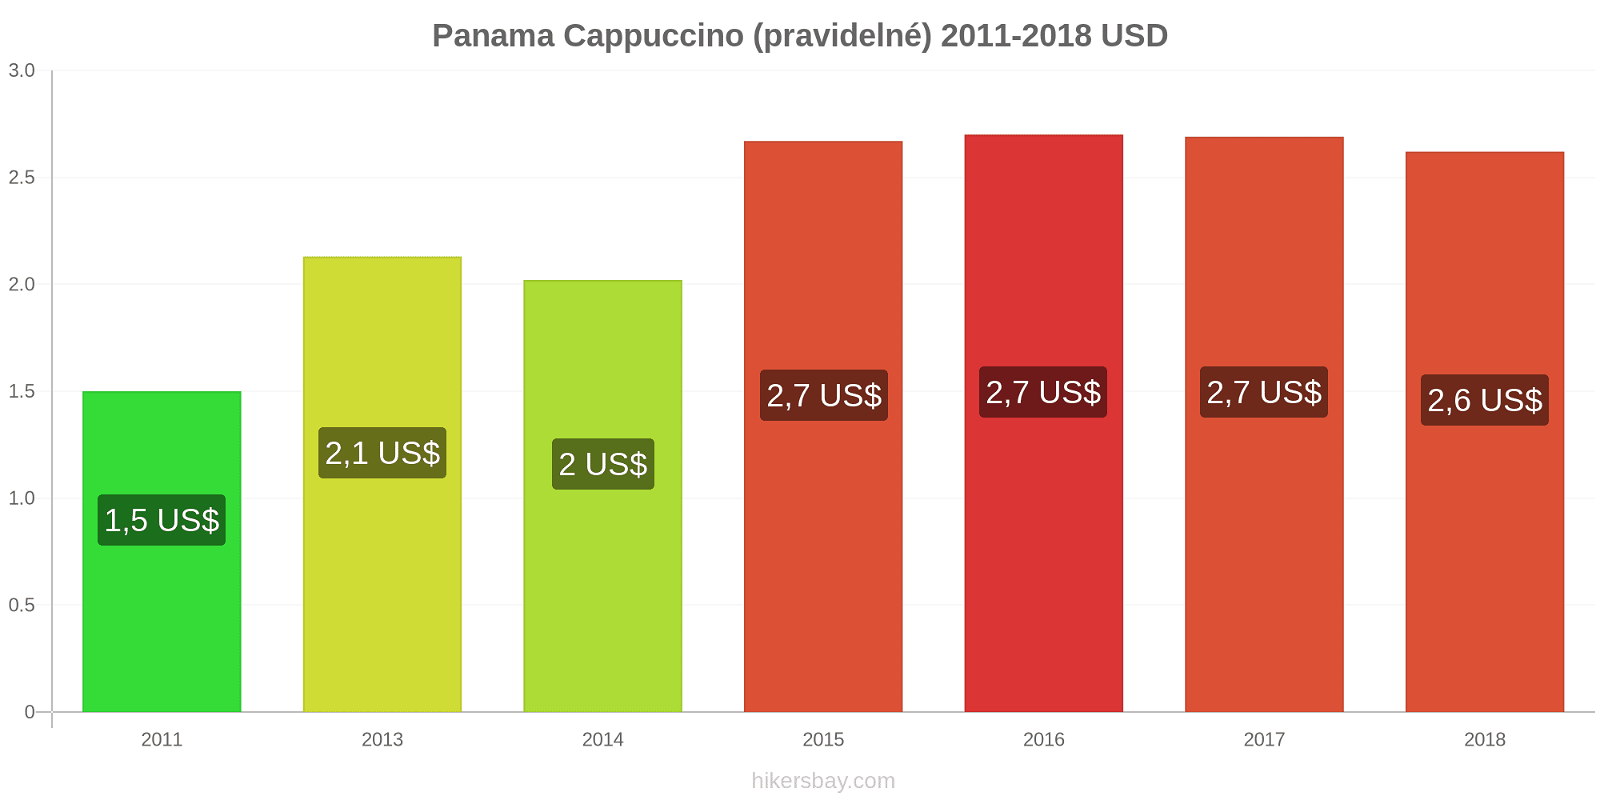 Panama změny cen Cappuccino hikersbay.com